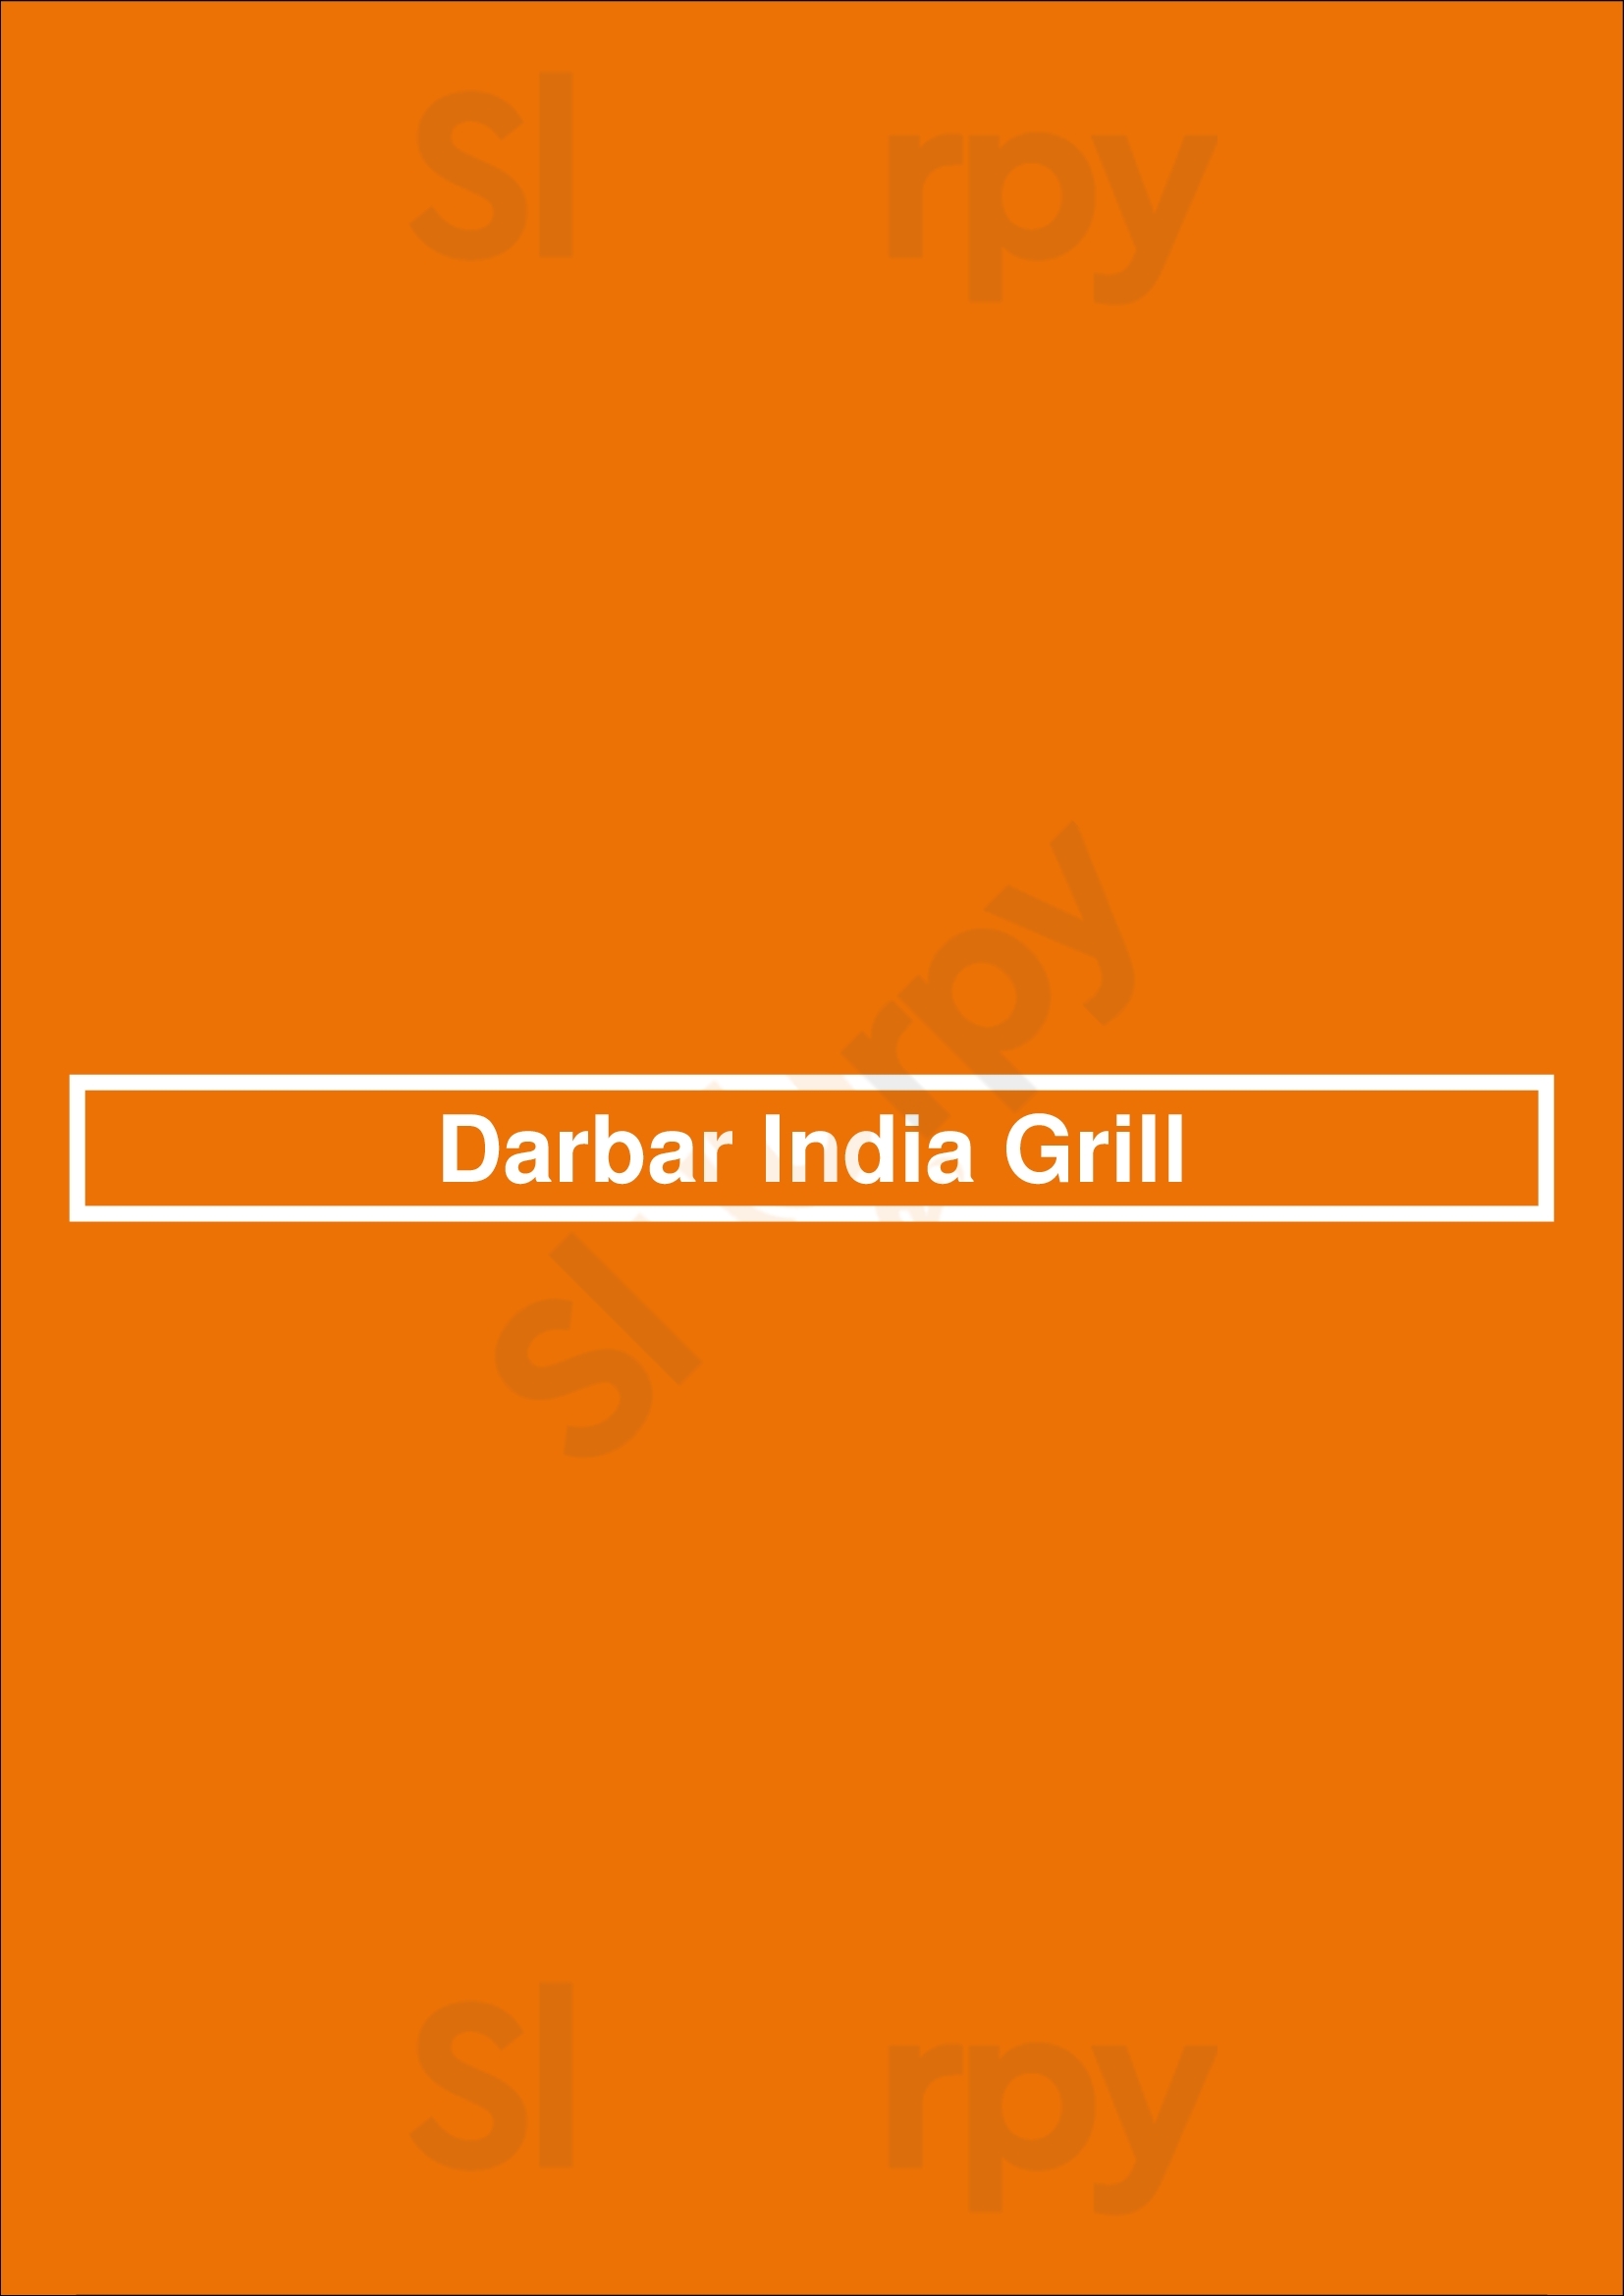 Darbar India Grill Minneapolis Menu - 1